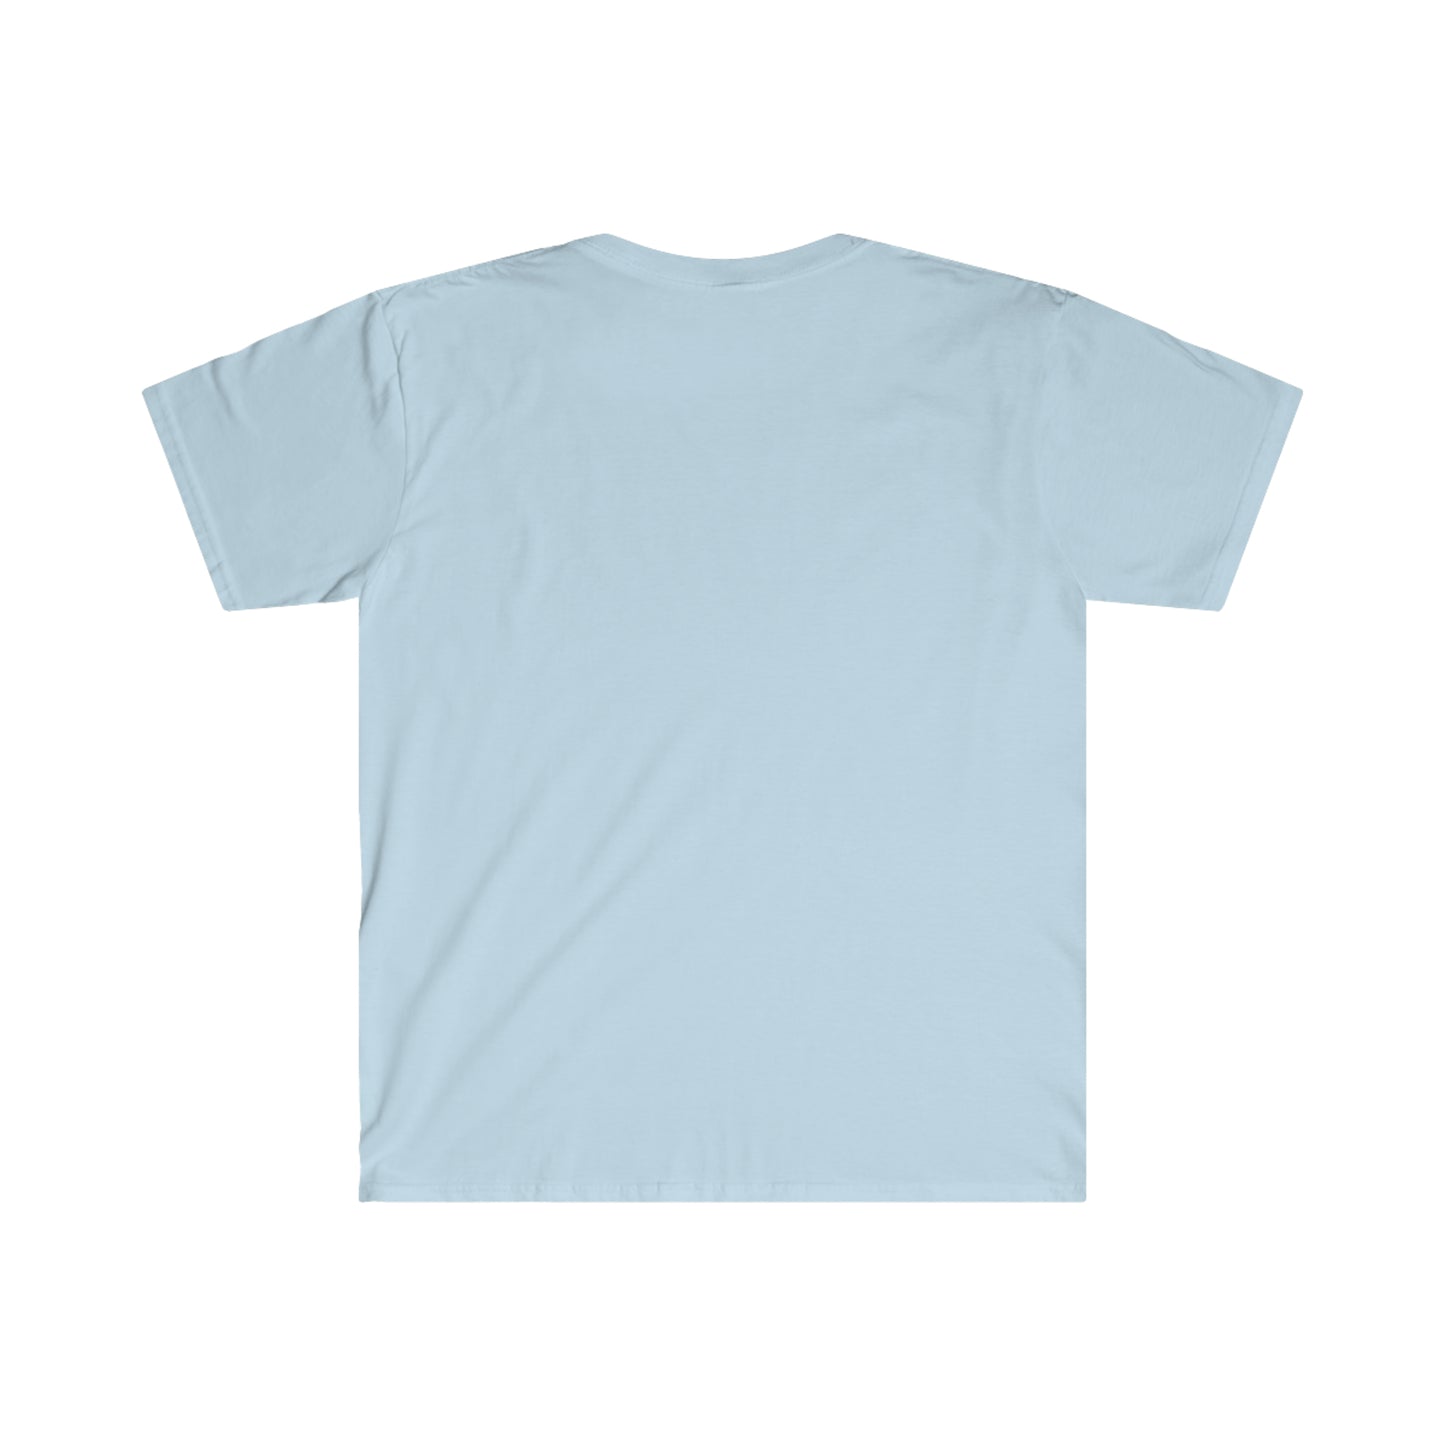 "Nothing Pursenale" Yorkie T-Shirt